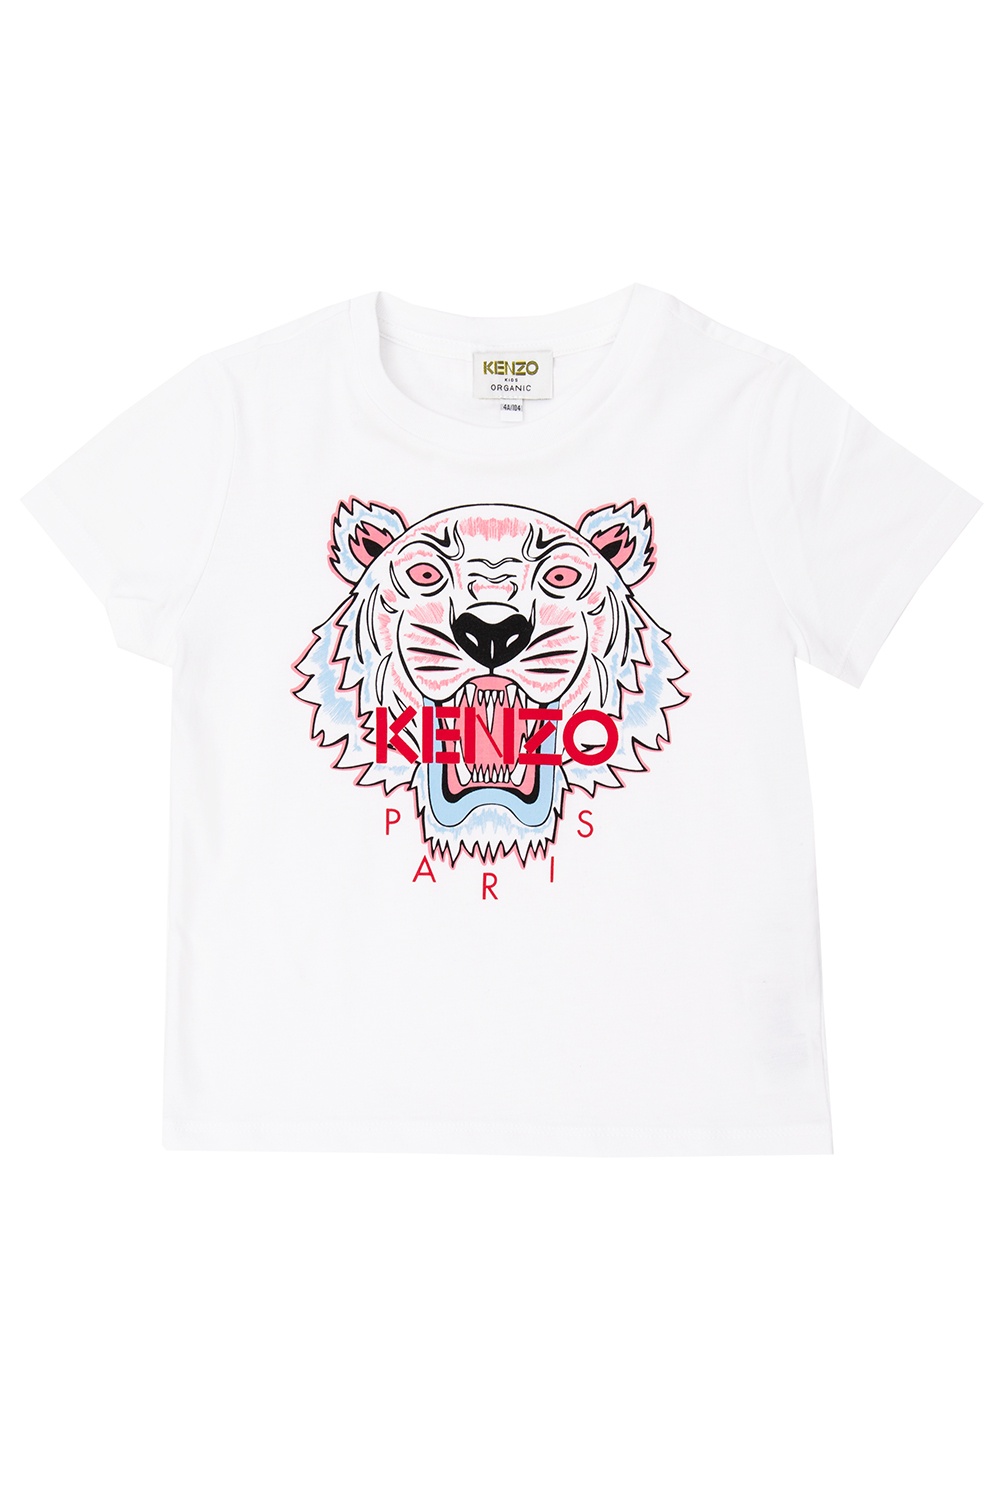 kenzo t shirt 164